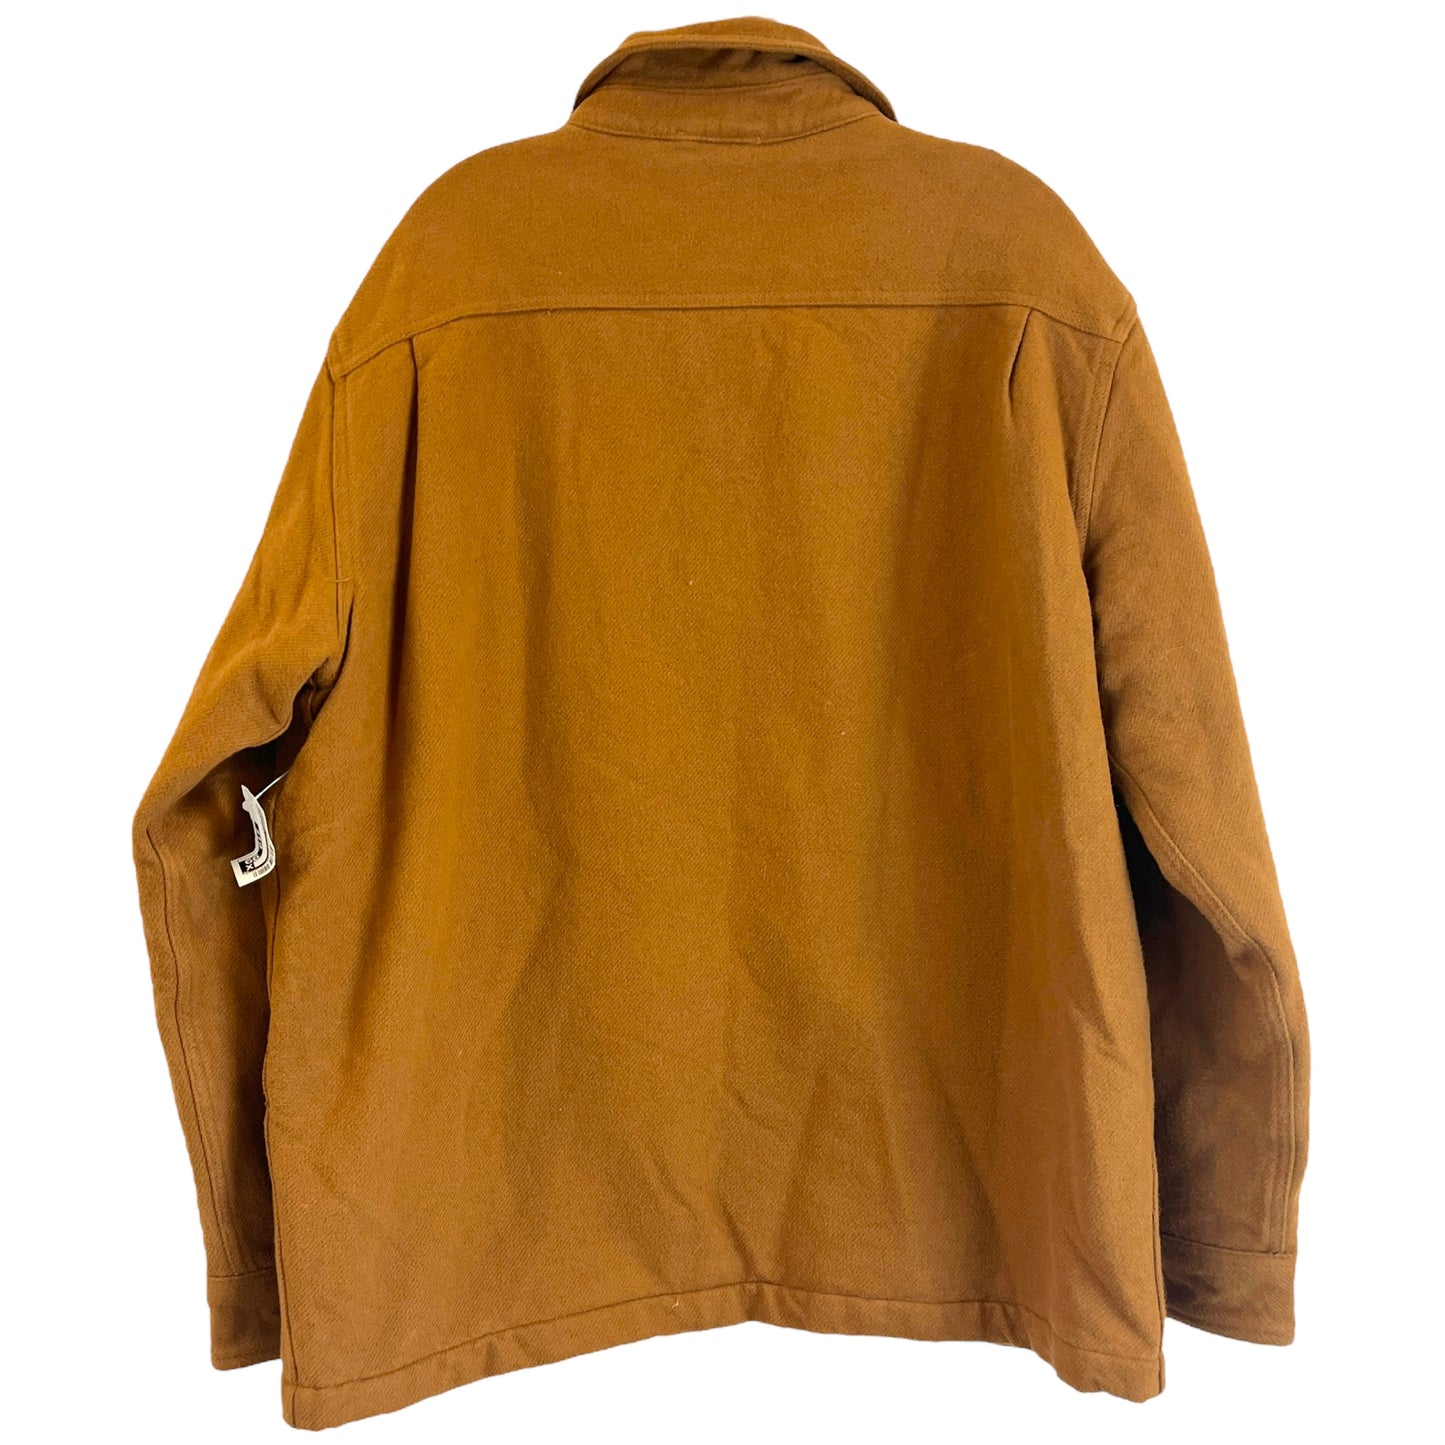 Jacket Shirt By Sonoma  Size: L